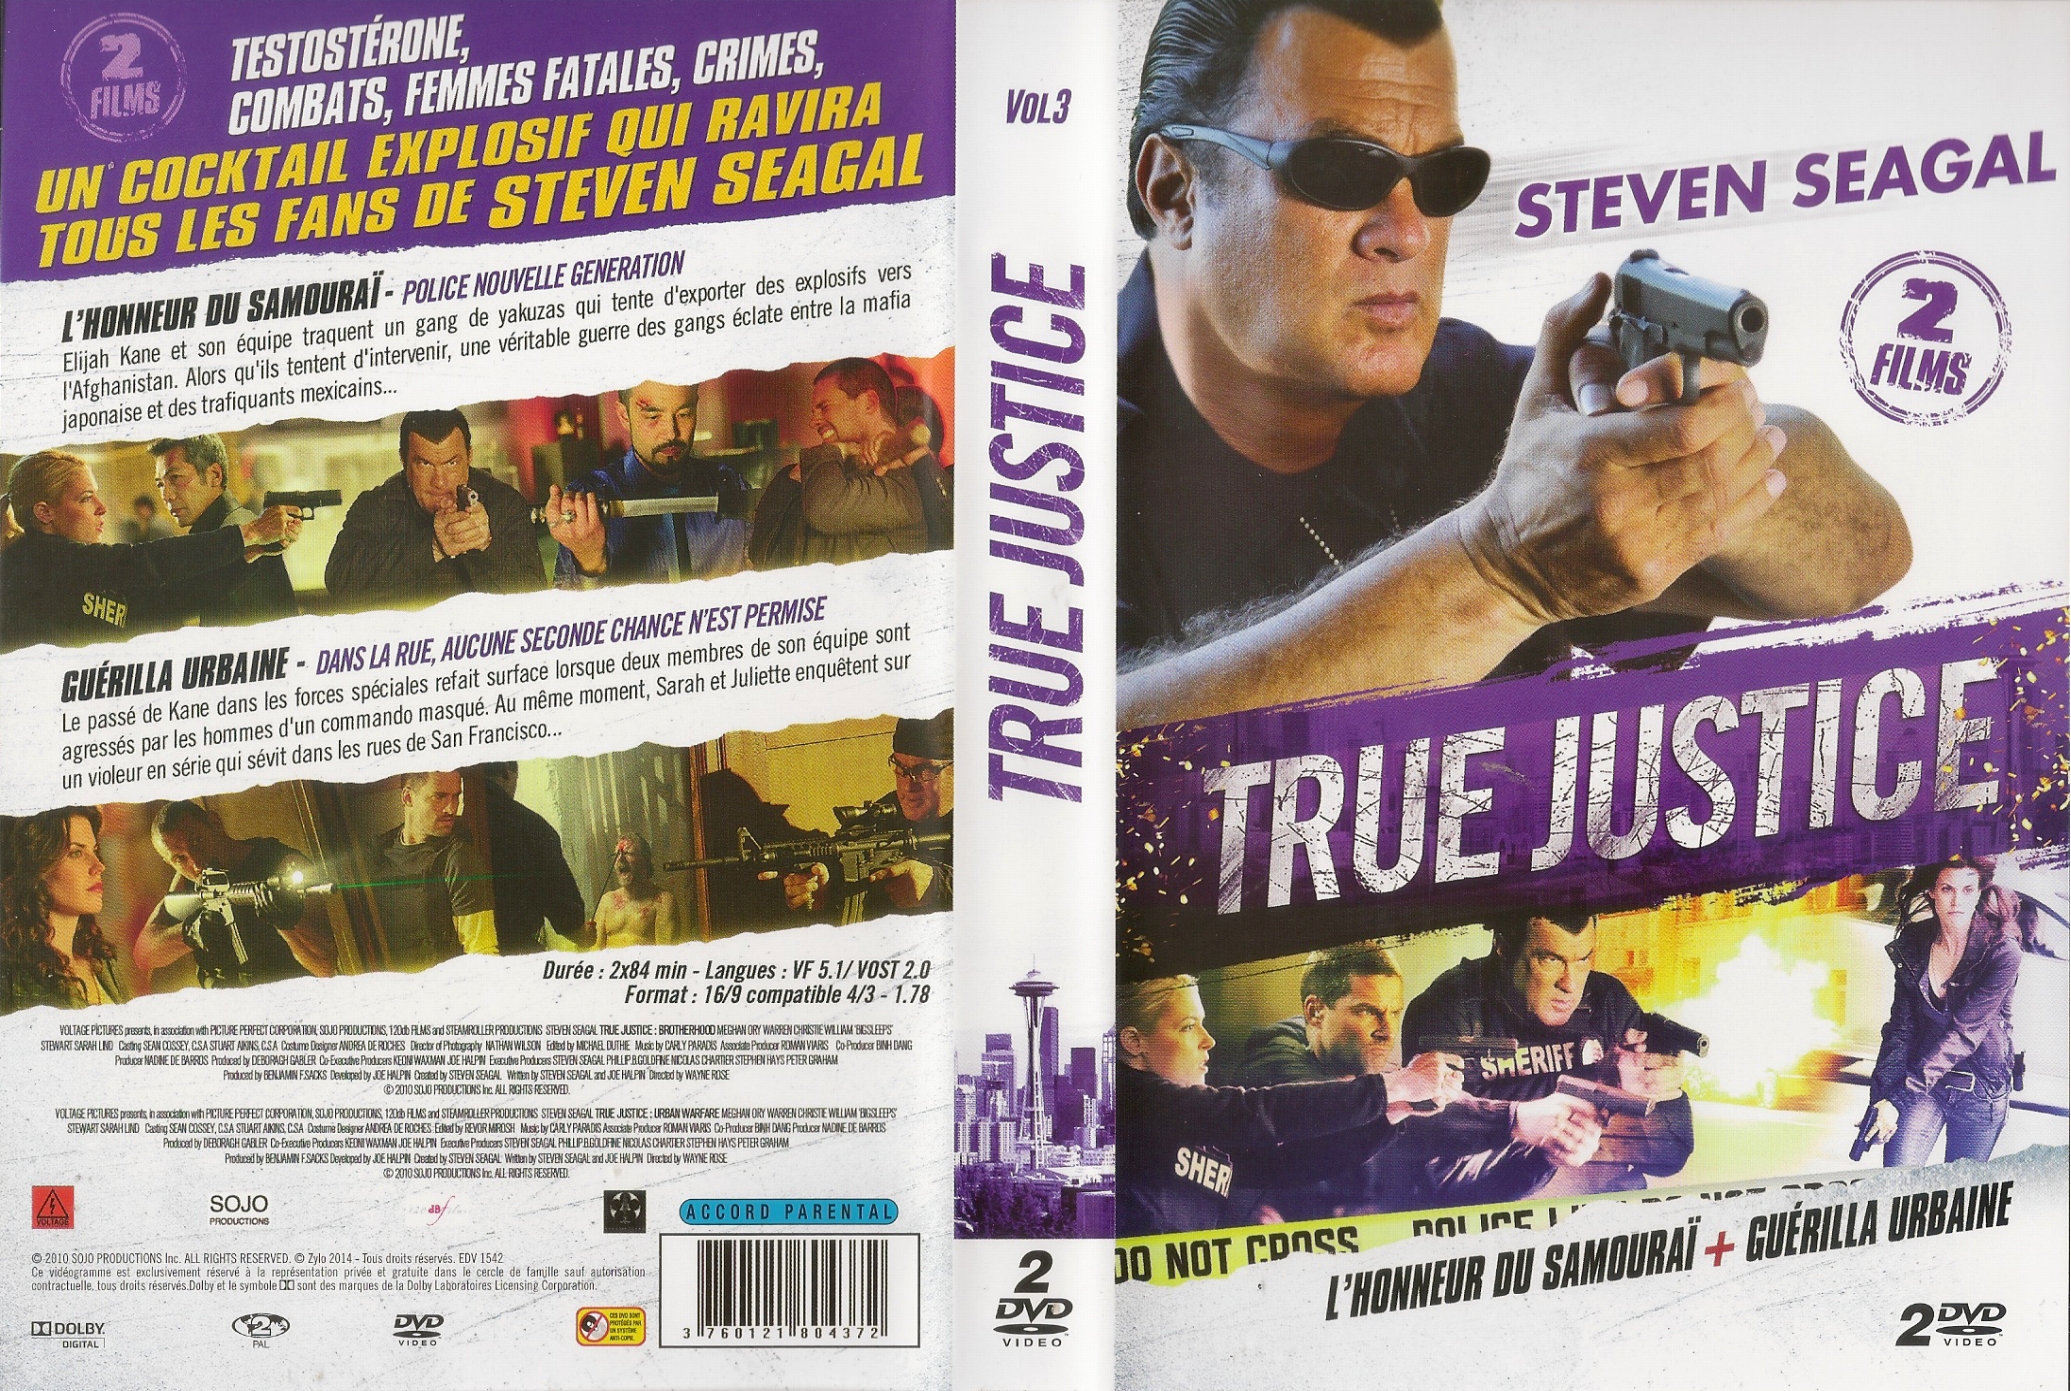 Jaquette DVD True Justice vol 03